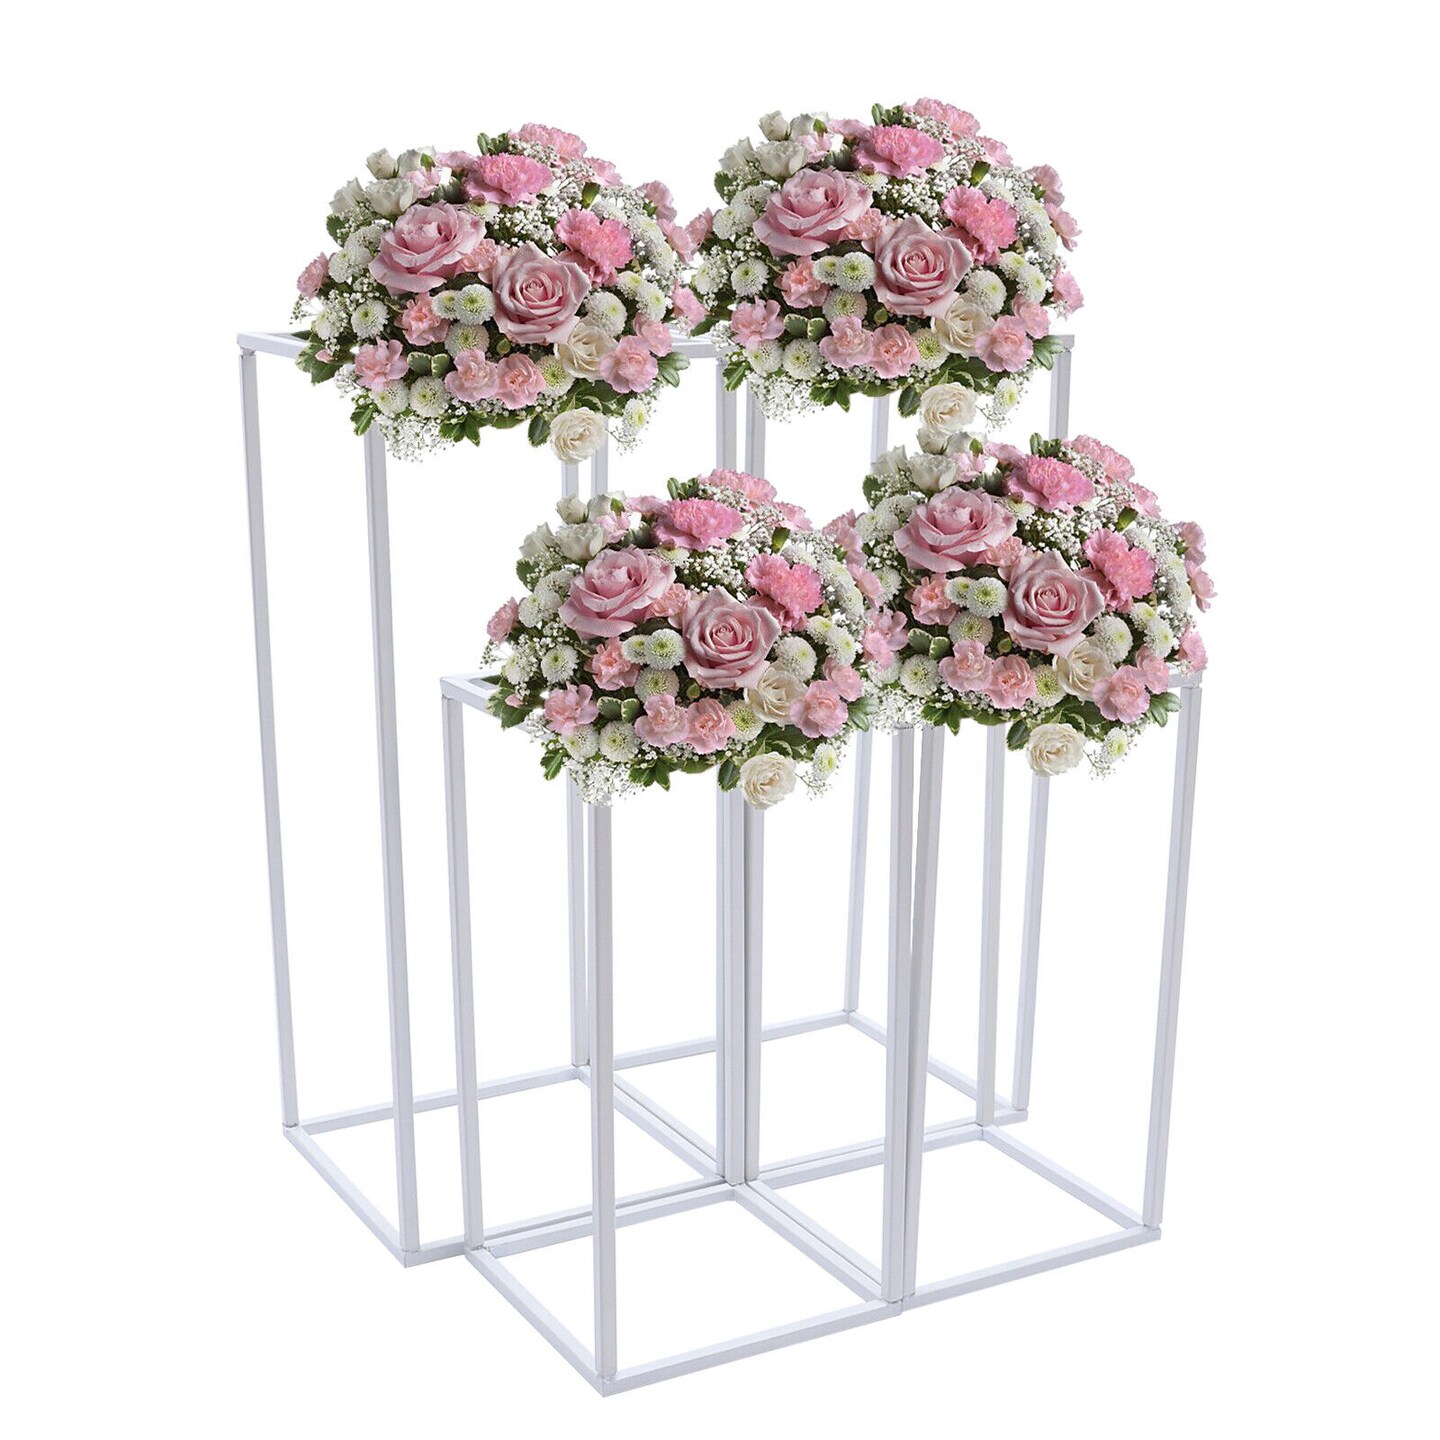 Kitcheniva Metal Flower Stand Wedding Party Rectangle Flower Pedestal Decor Set of 4 White